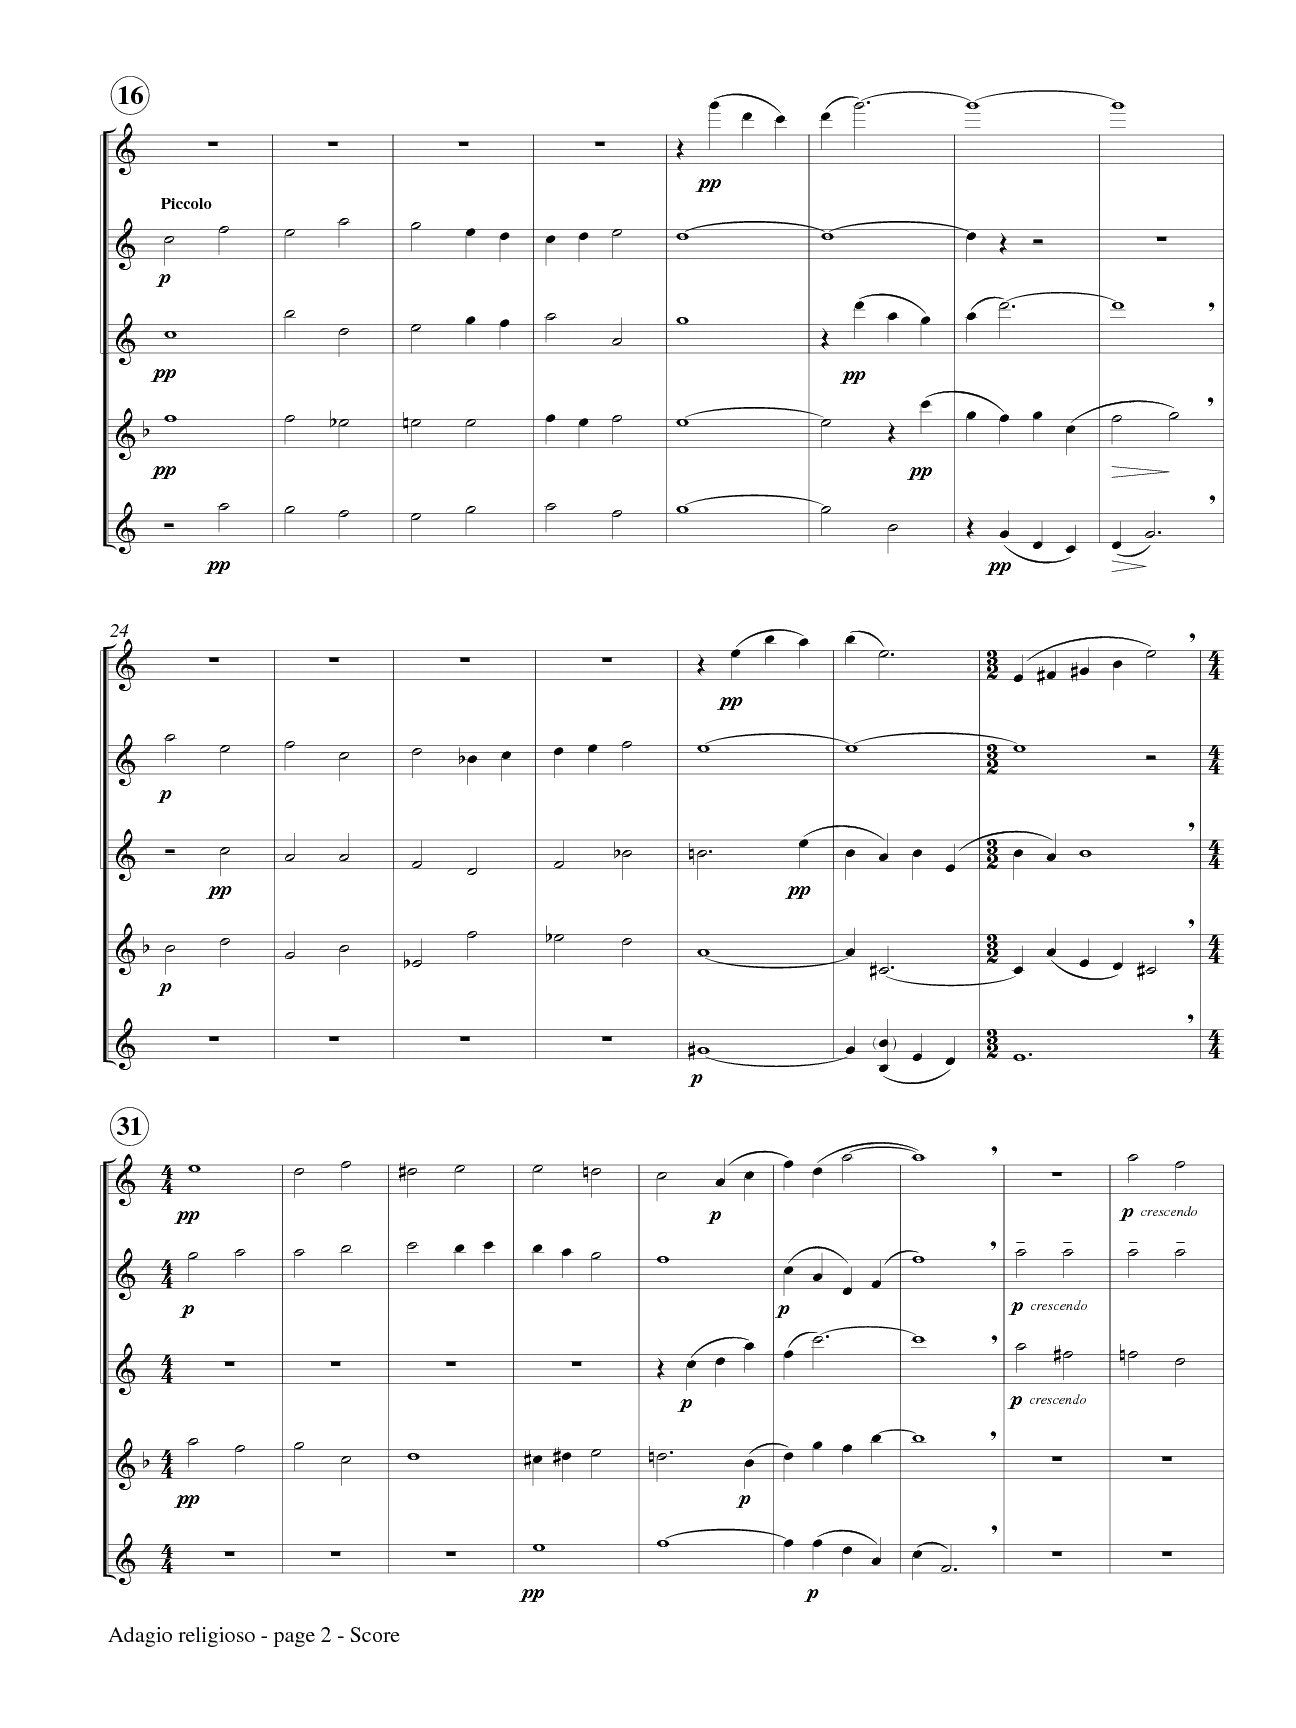 Bartok, Bela - Adagio religioso from Piano Concerto No. 3 for Flute Quintet